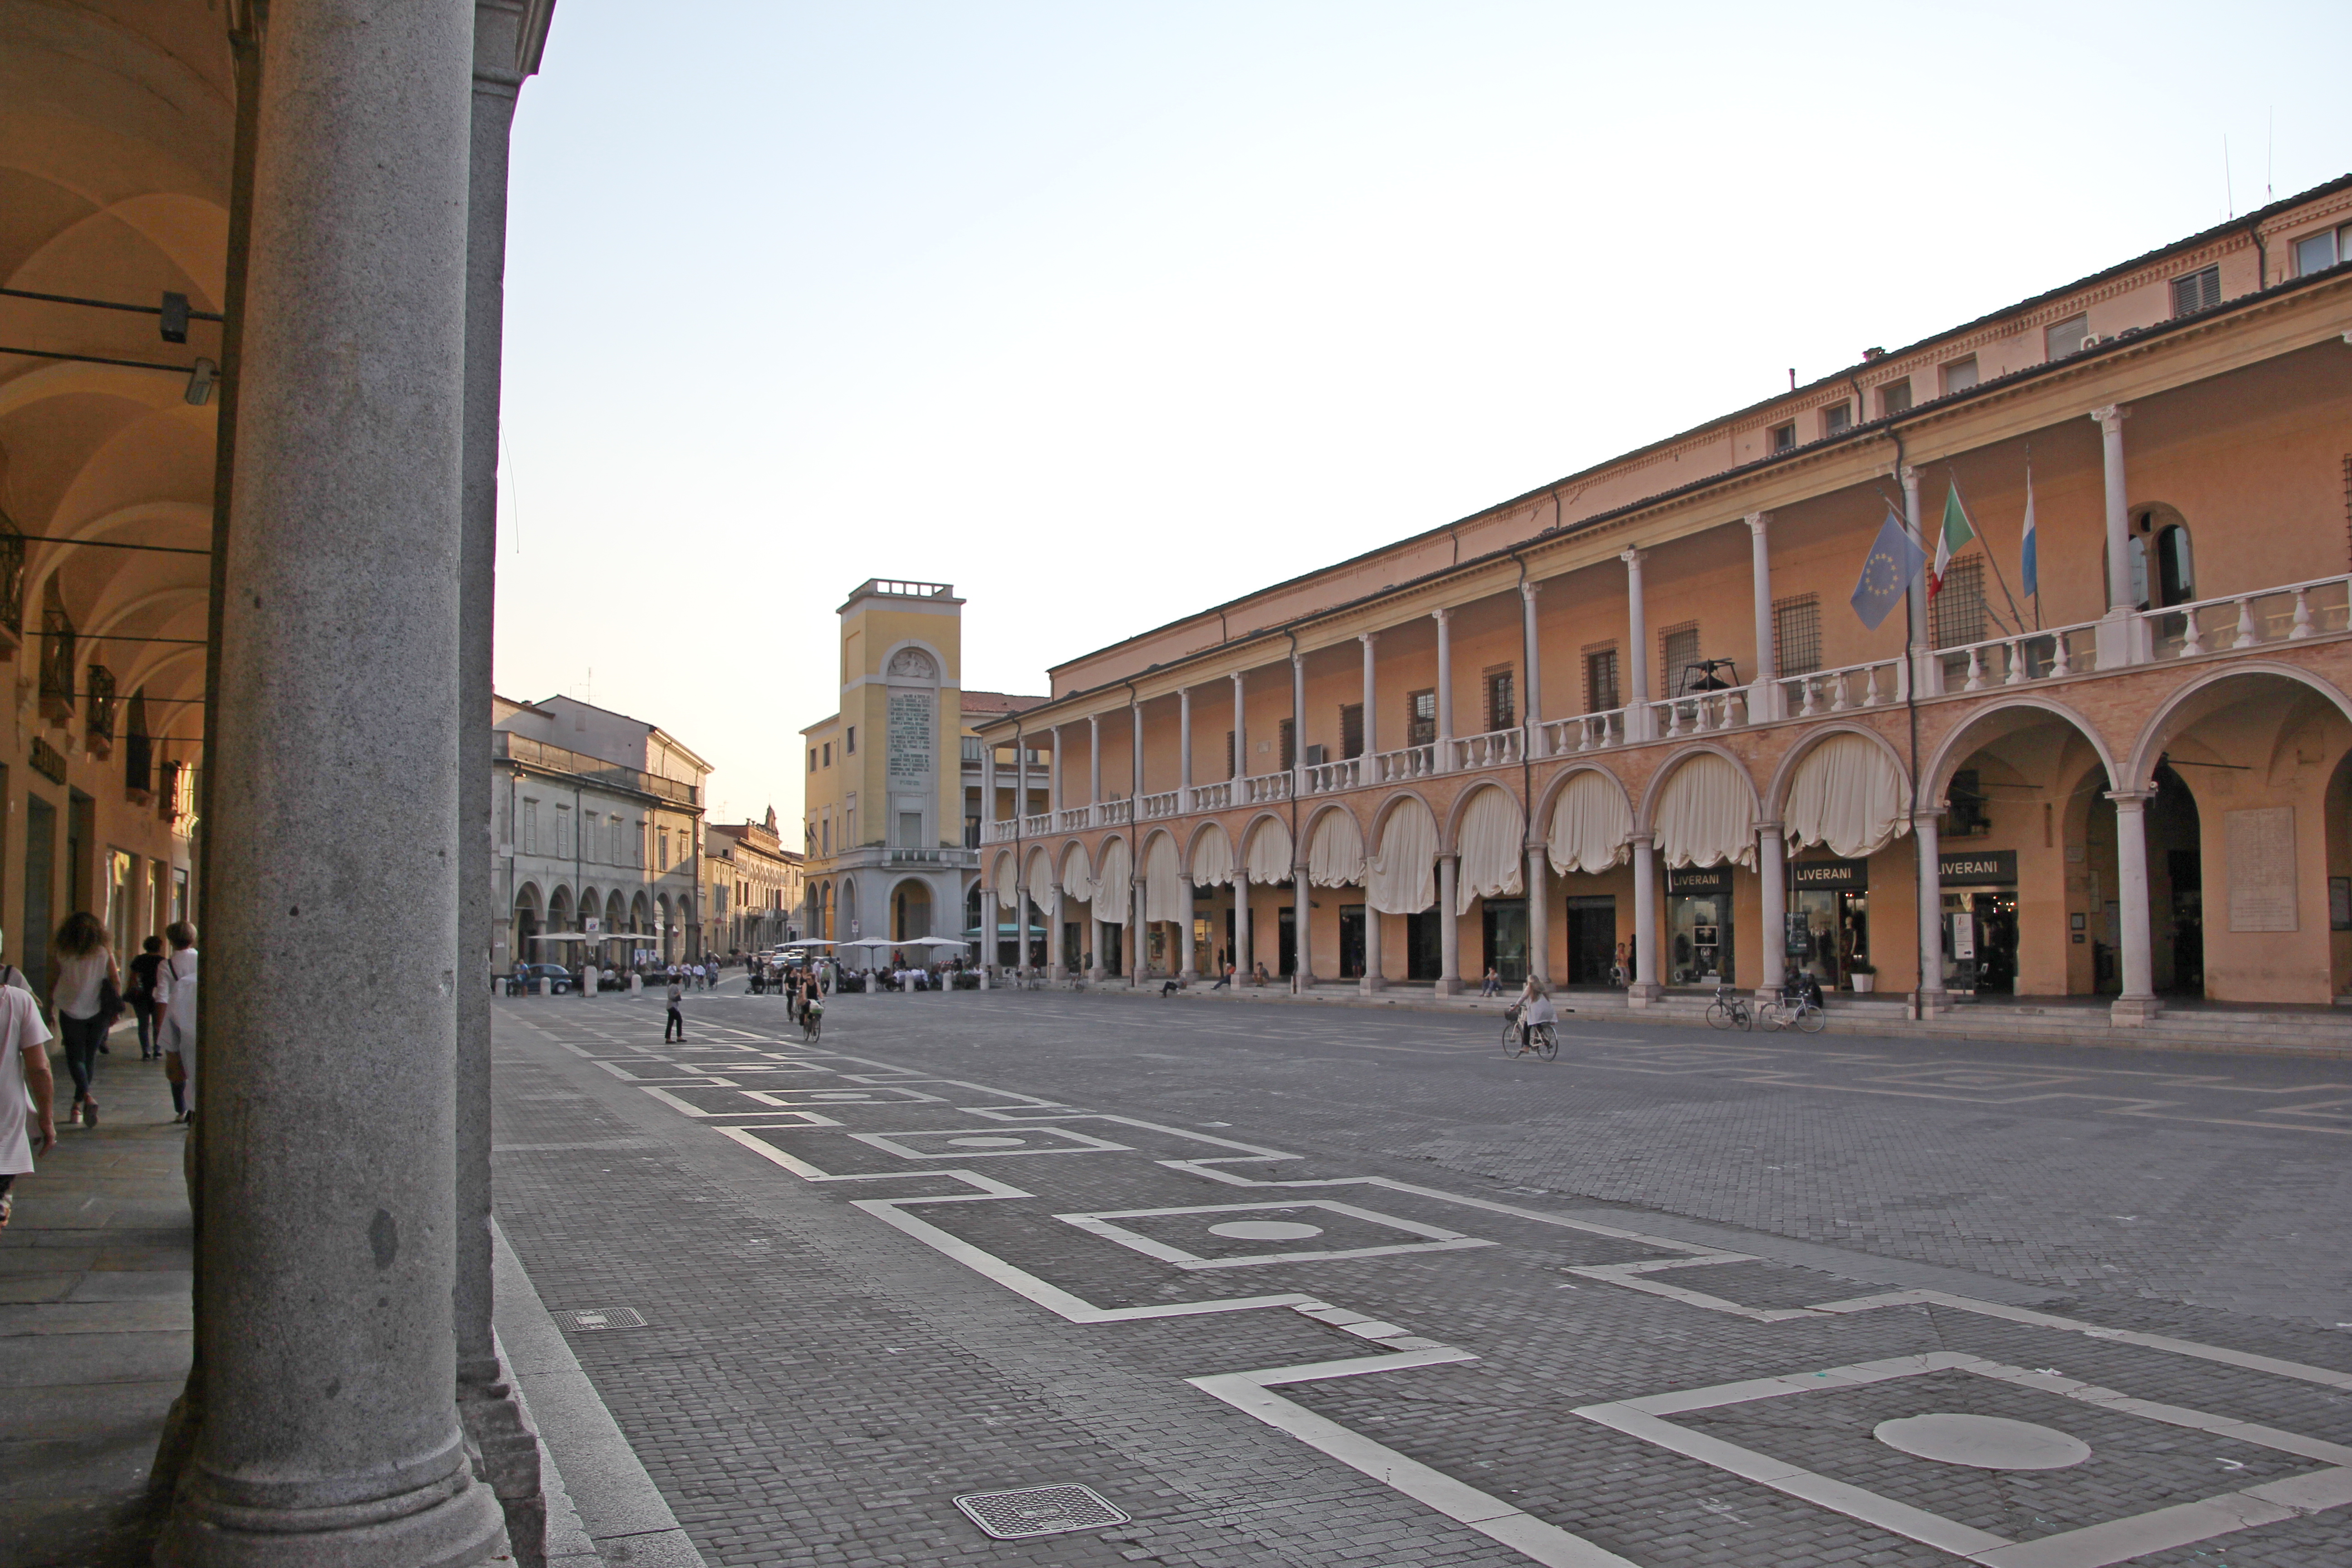 photo: https://upload.wikimedia.org/wikipedia/commons/6/61/Faenza%2C_piazza_del_Popolo_%2801%29.jpg